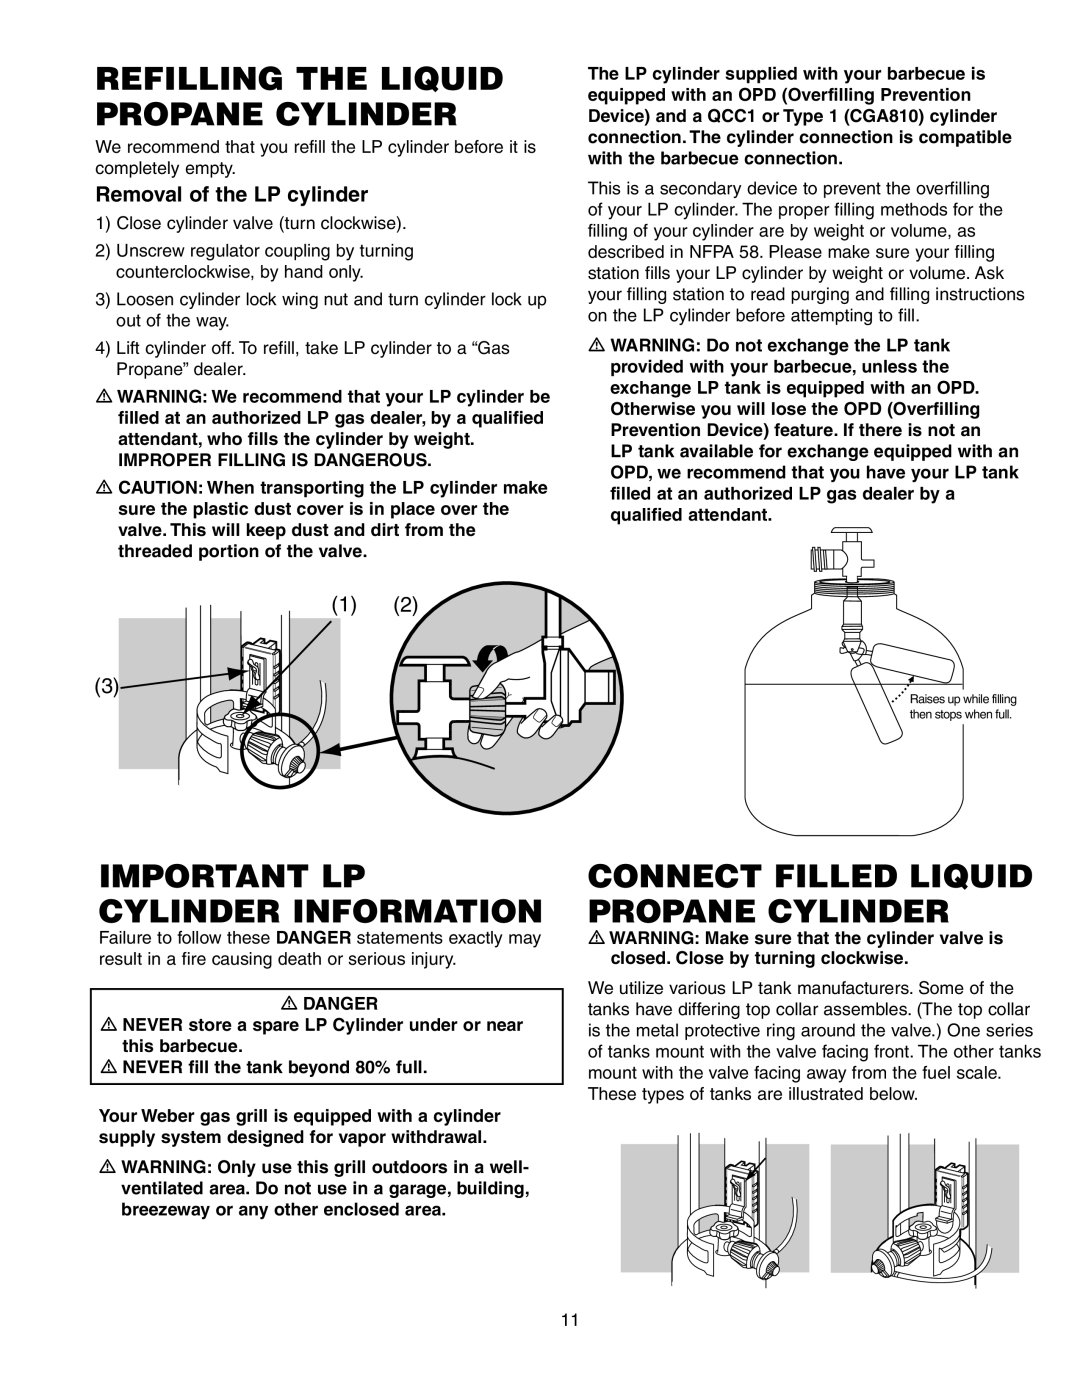 Weber 650 Refilling The Liquid Propane Cylinder, Important Lp Cylinder Information, Connect Filled Liquid Propane Cylinder 